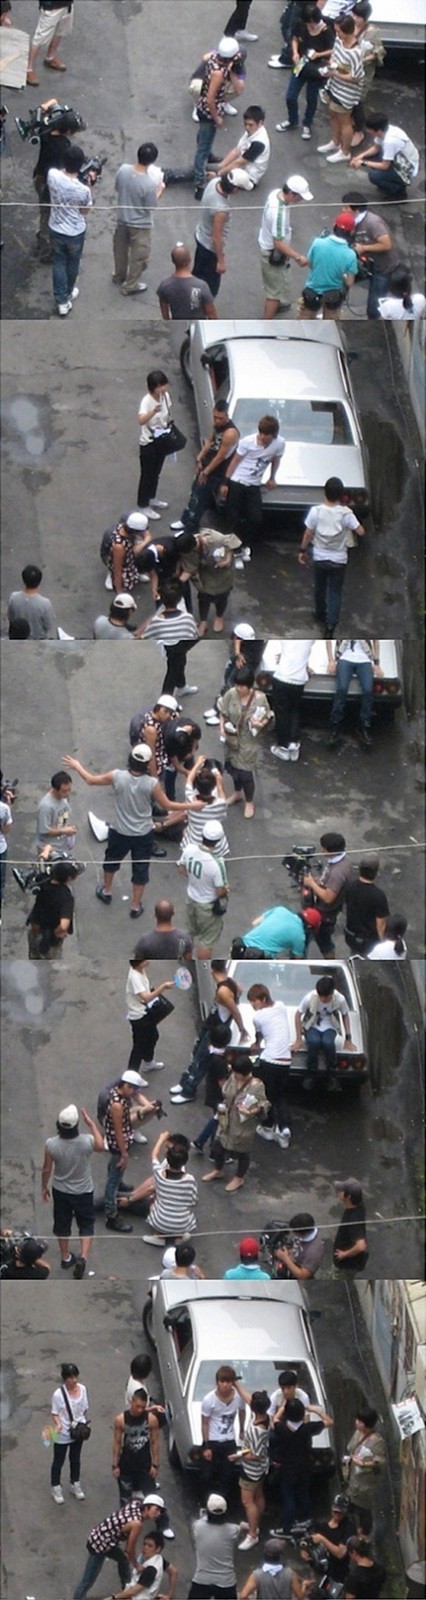 bang - Big Bang Members Caught Fighting On The Street!? Mt31ok10